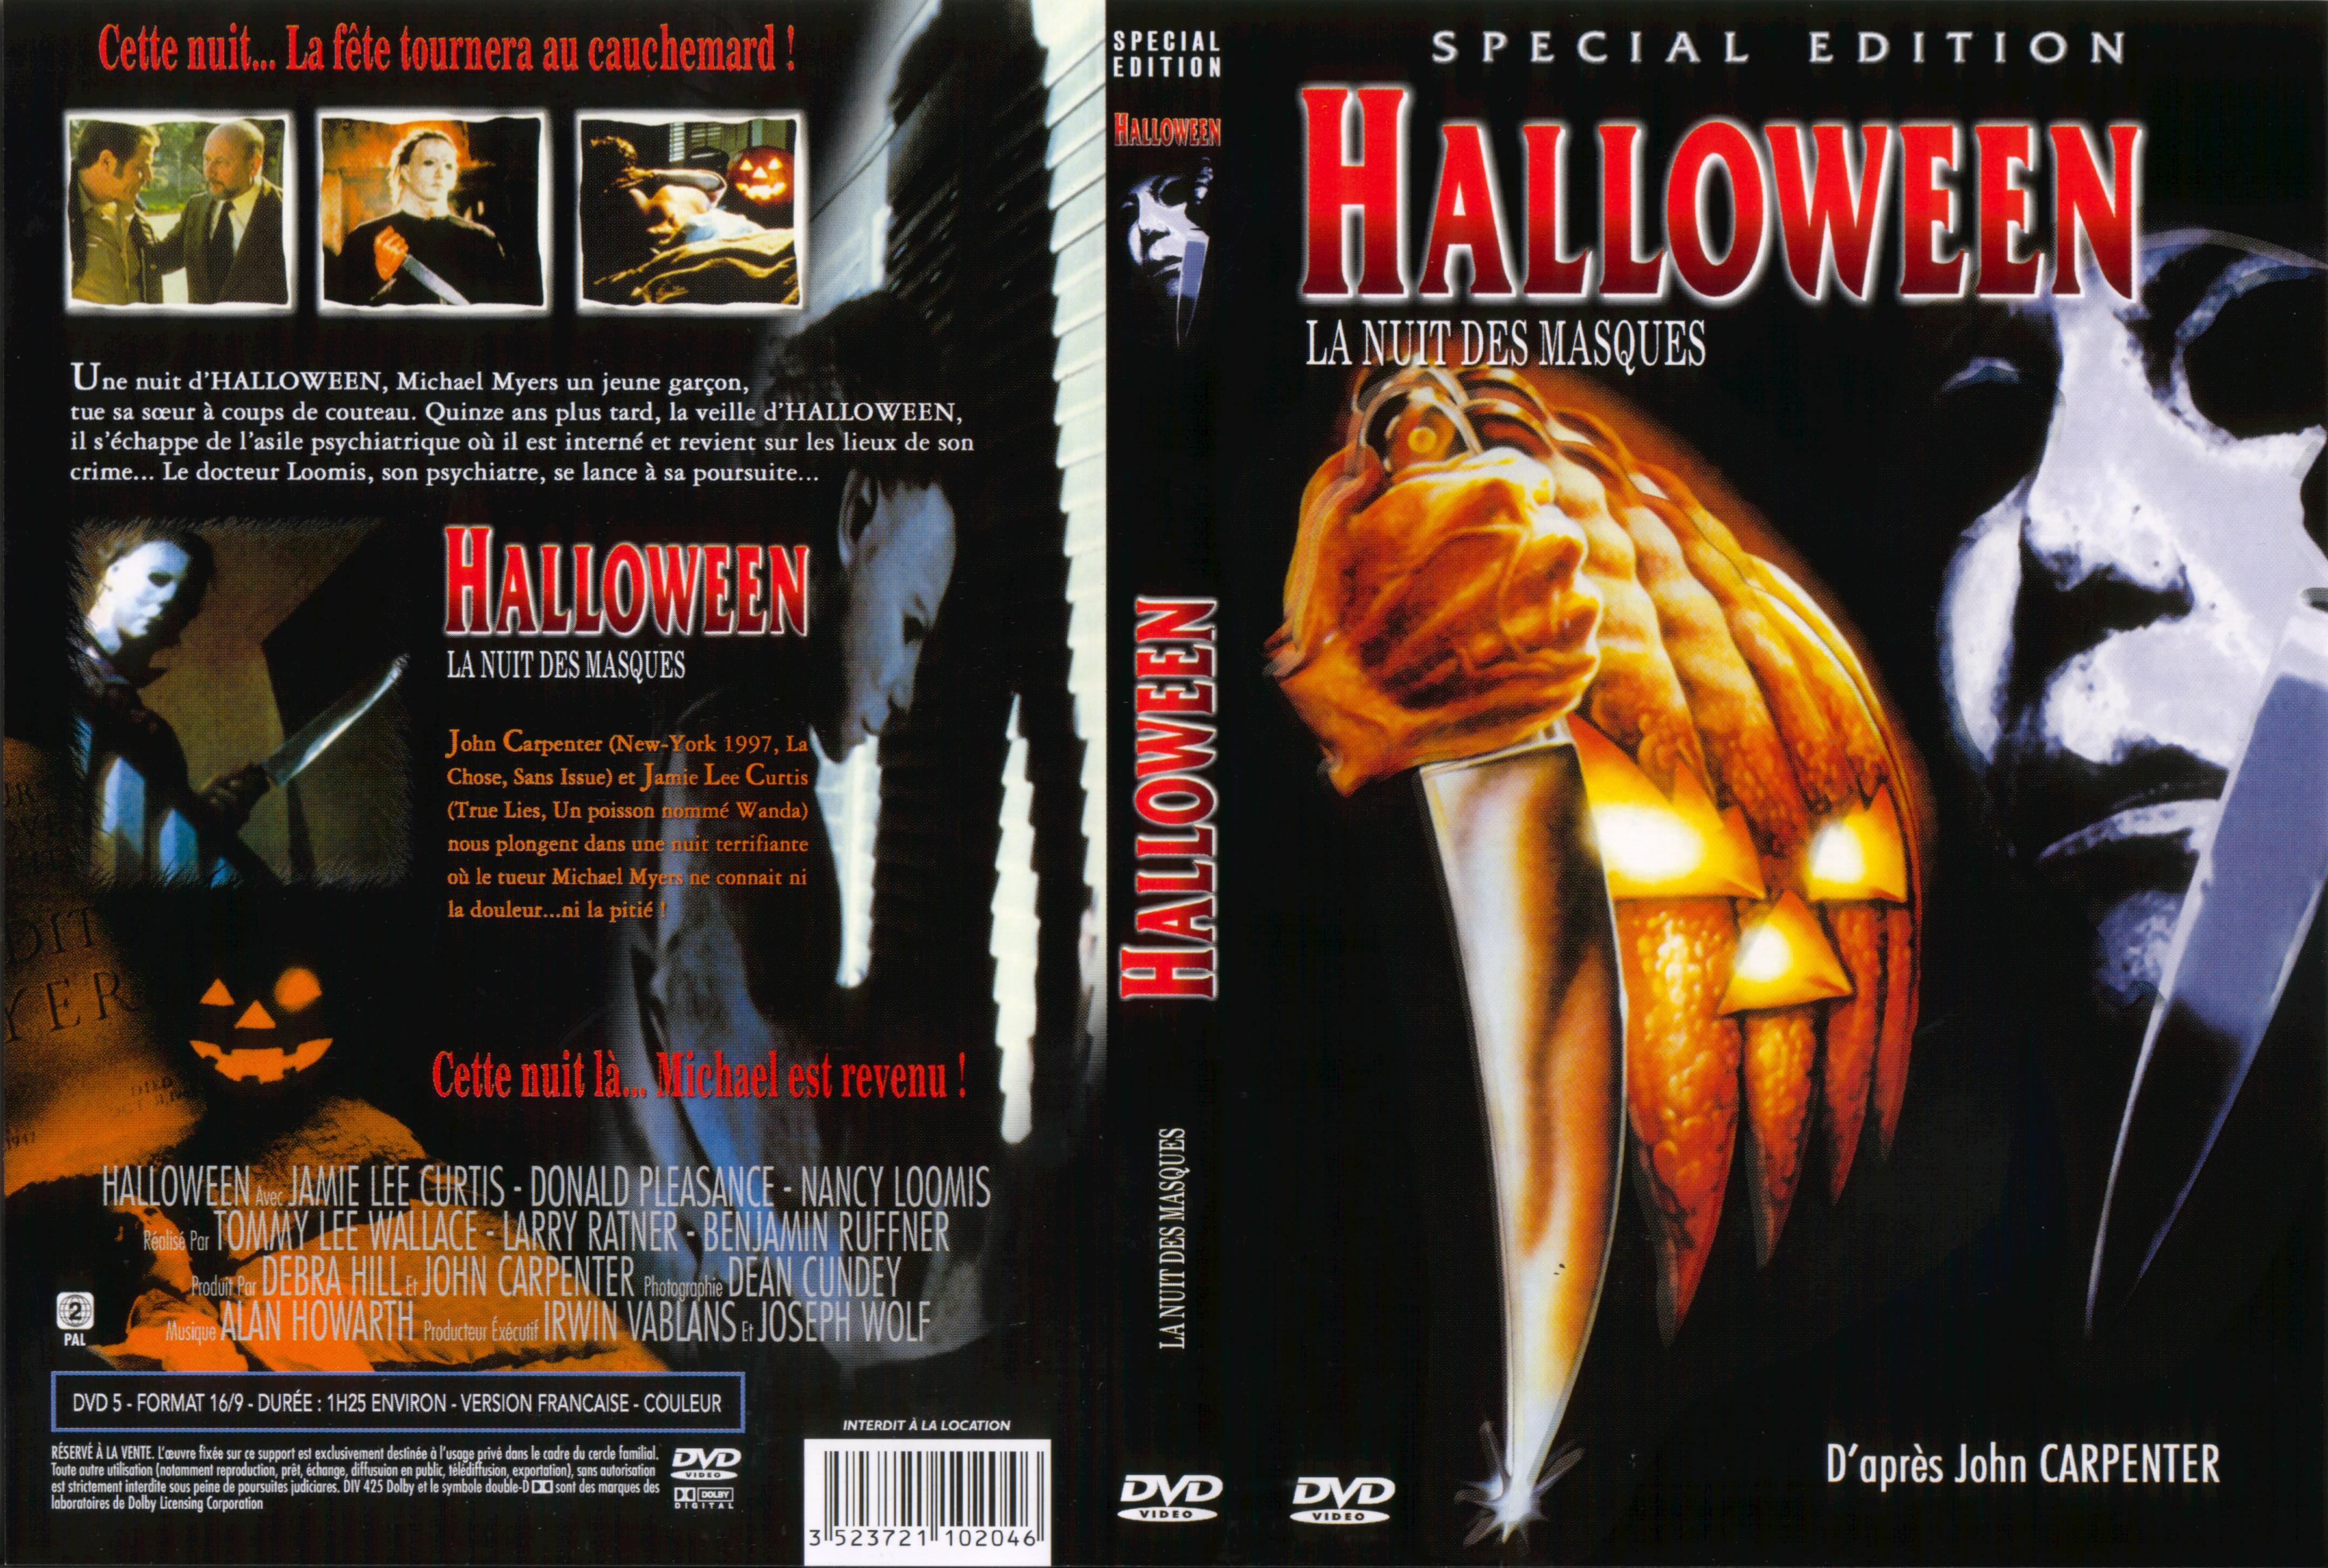 Jaquette DVD Halloween v3